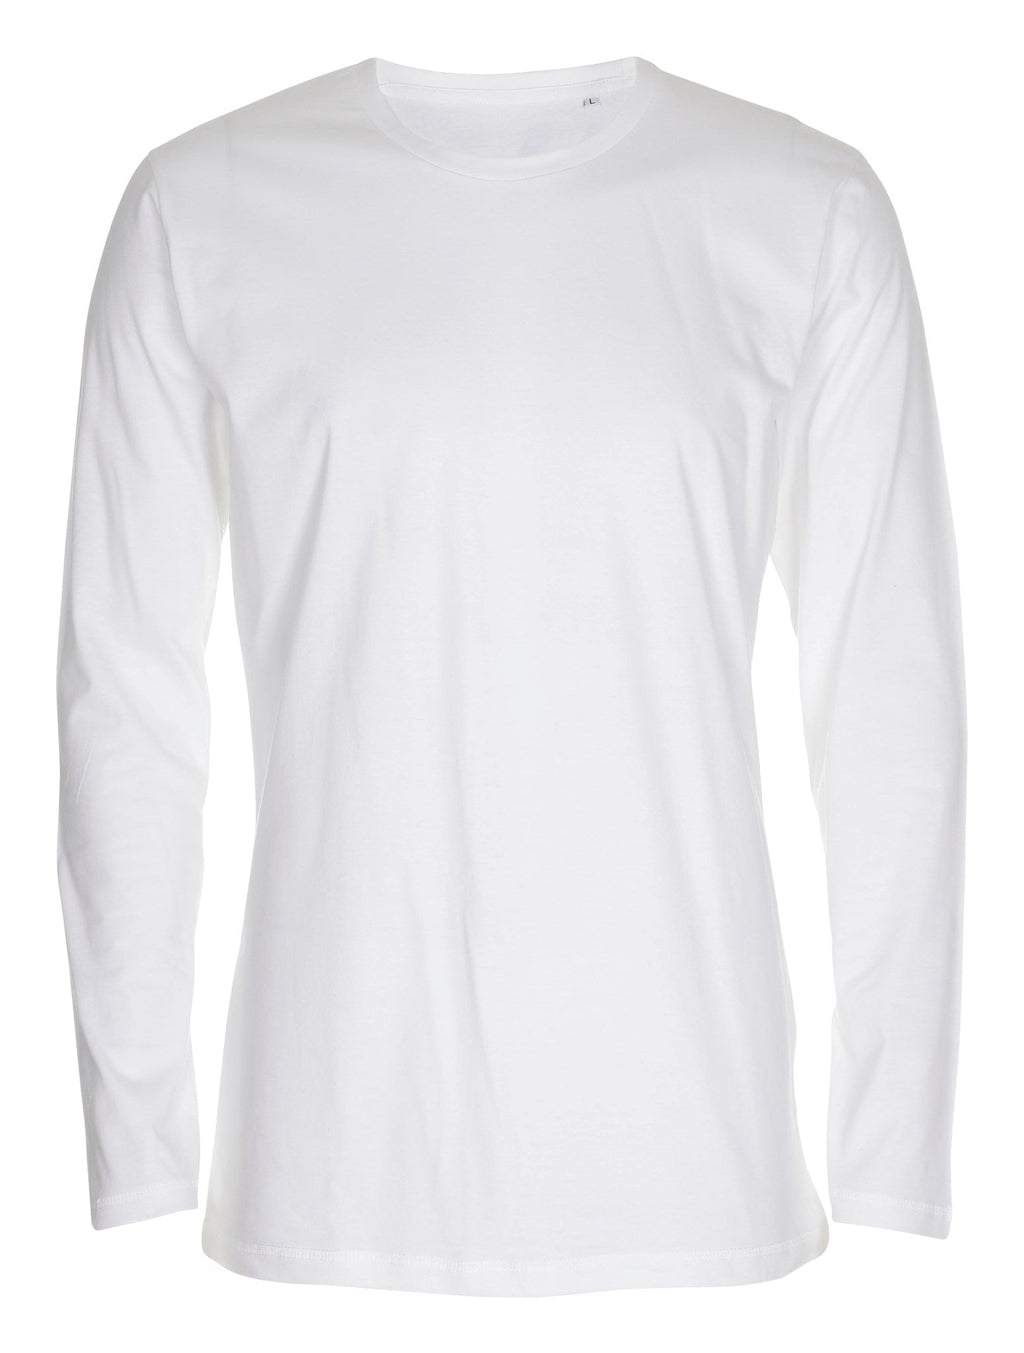 Camiseta básica de manga larga-blanco